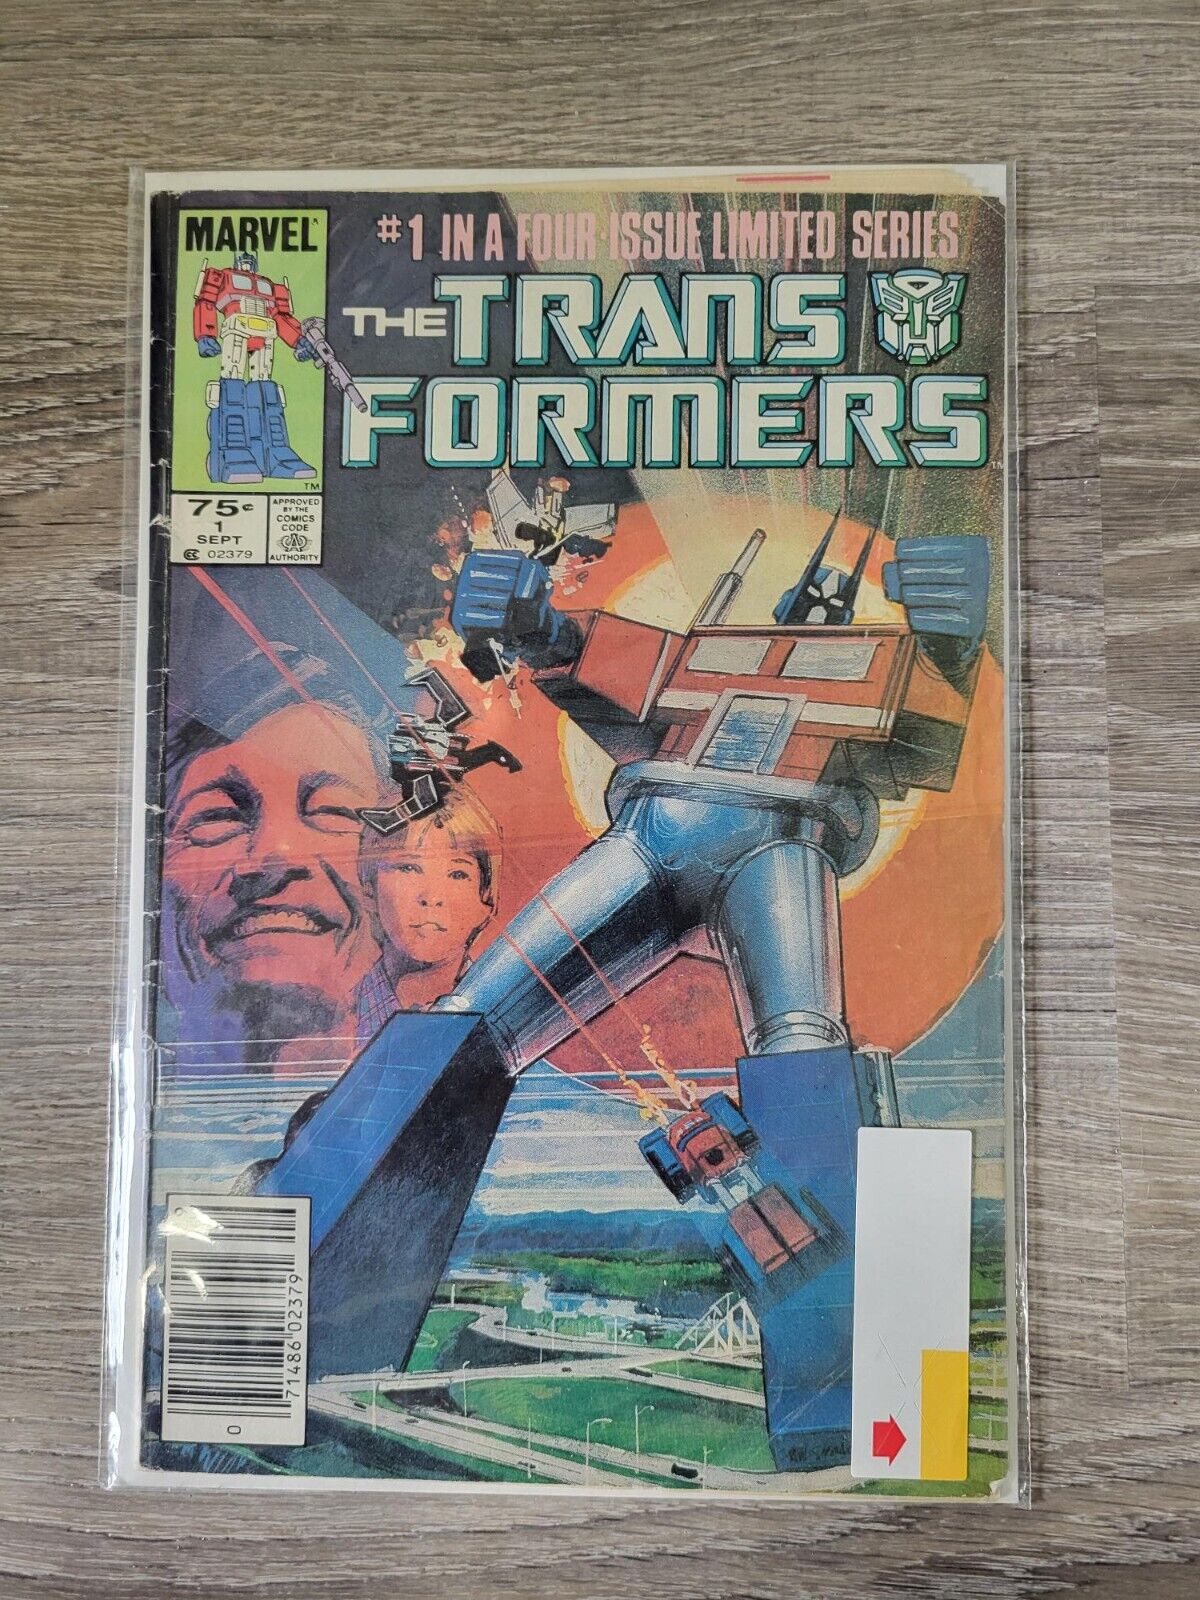 The Transformers #1 Comic Book - Marvel - September 1984 - Good/Fair Condition